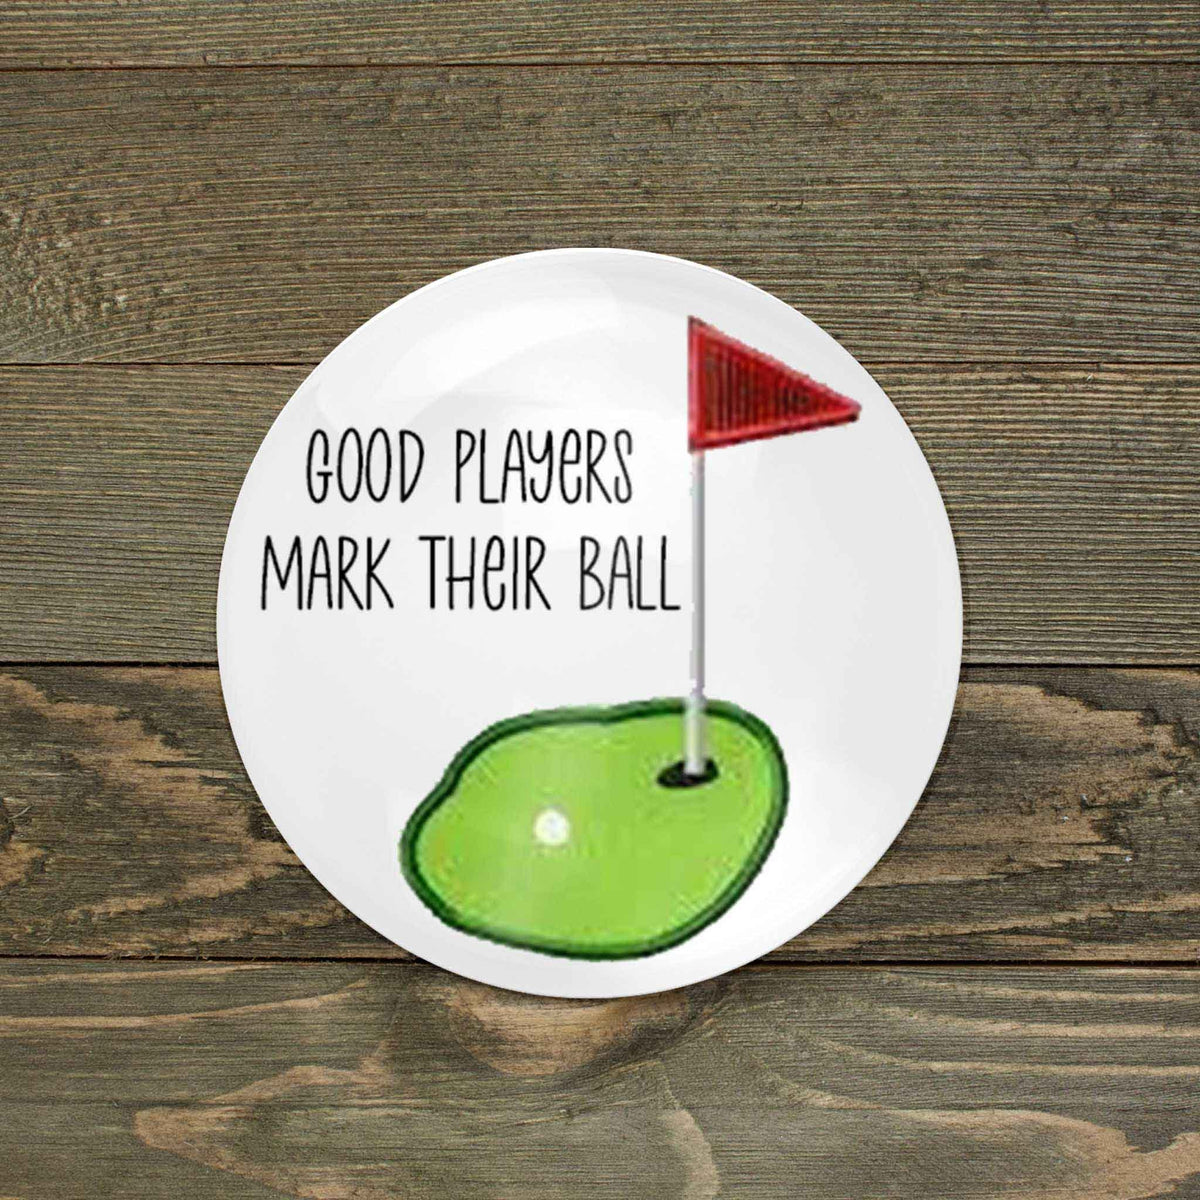 Custom Pitchfix Golf Accessories | Personalized Golf Hatclip | Good Players Mark Their Ball